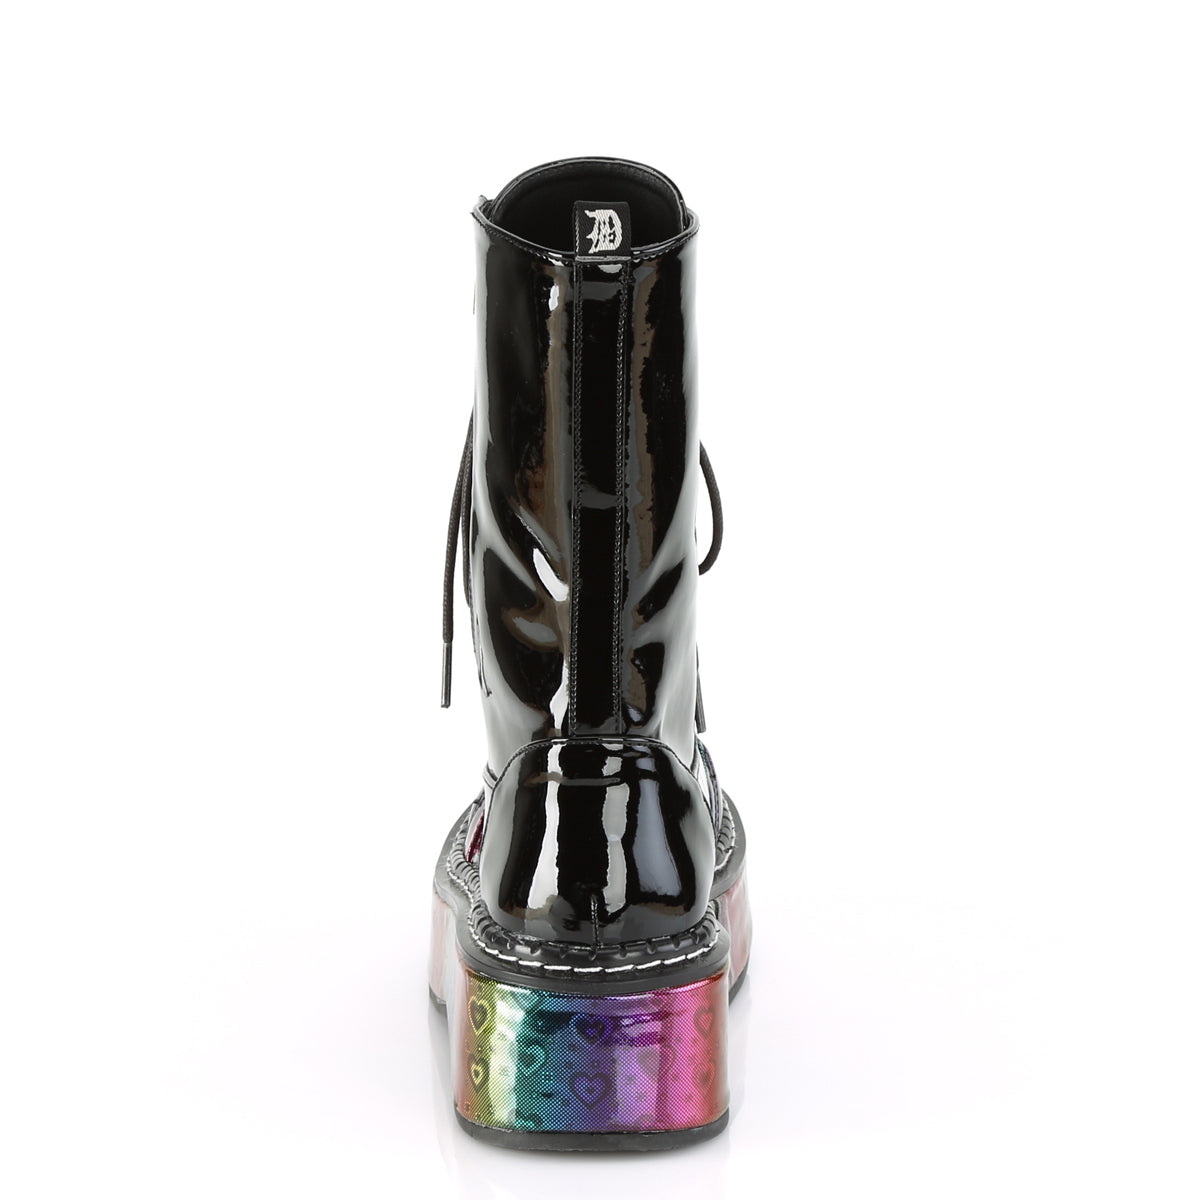 DemoniaCult Womens Boots EMILY-350 Blk Pat-Rainbow Hologram w/ Hearts